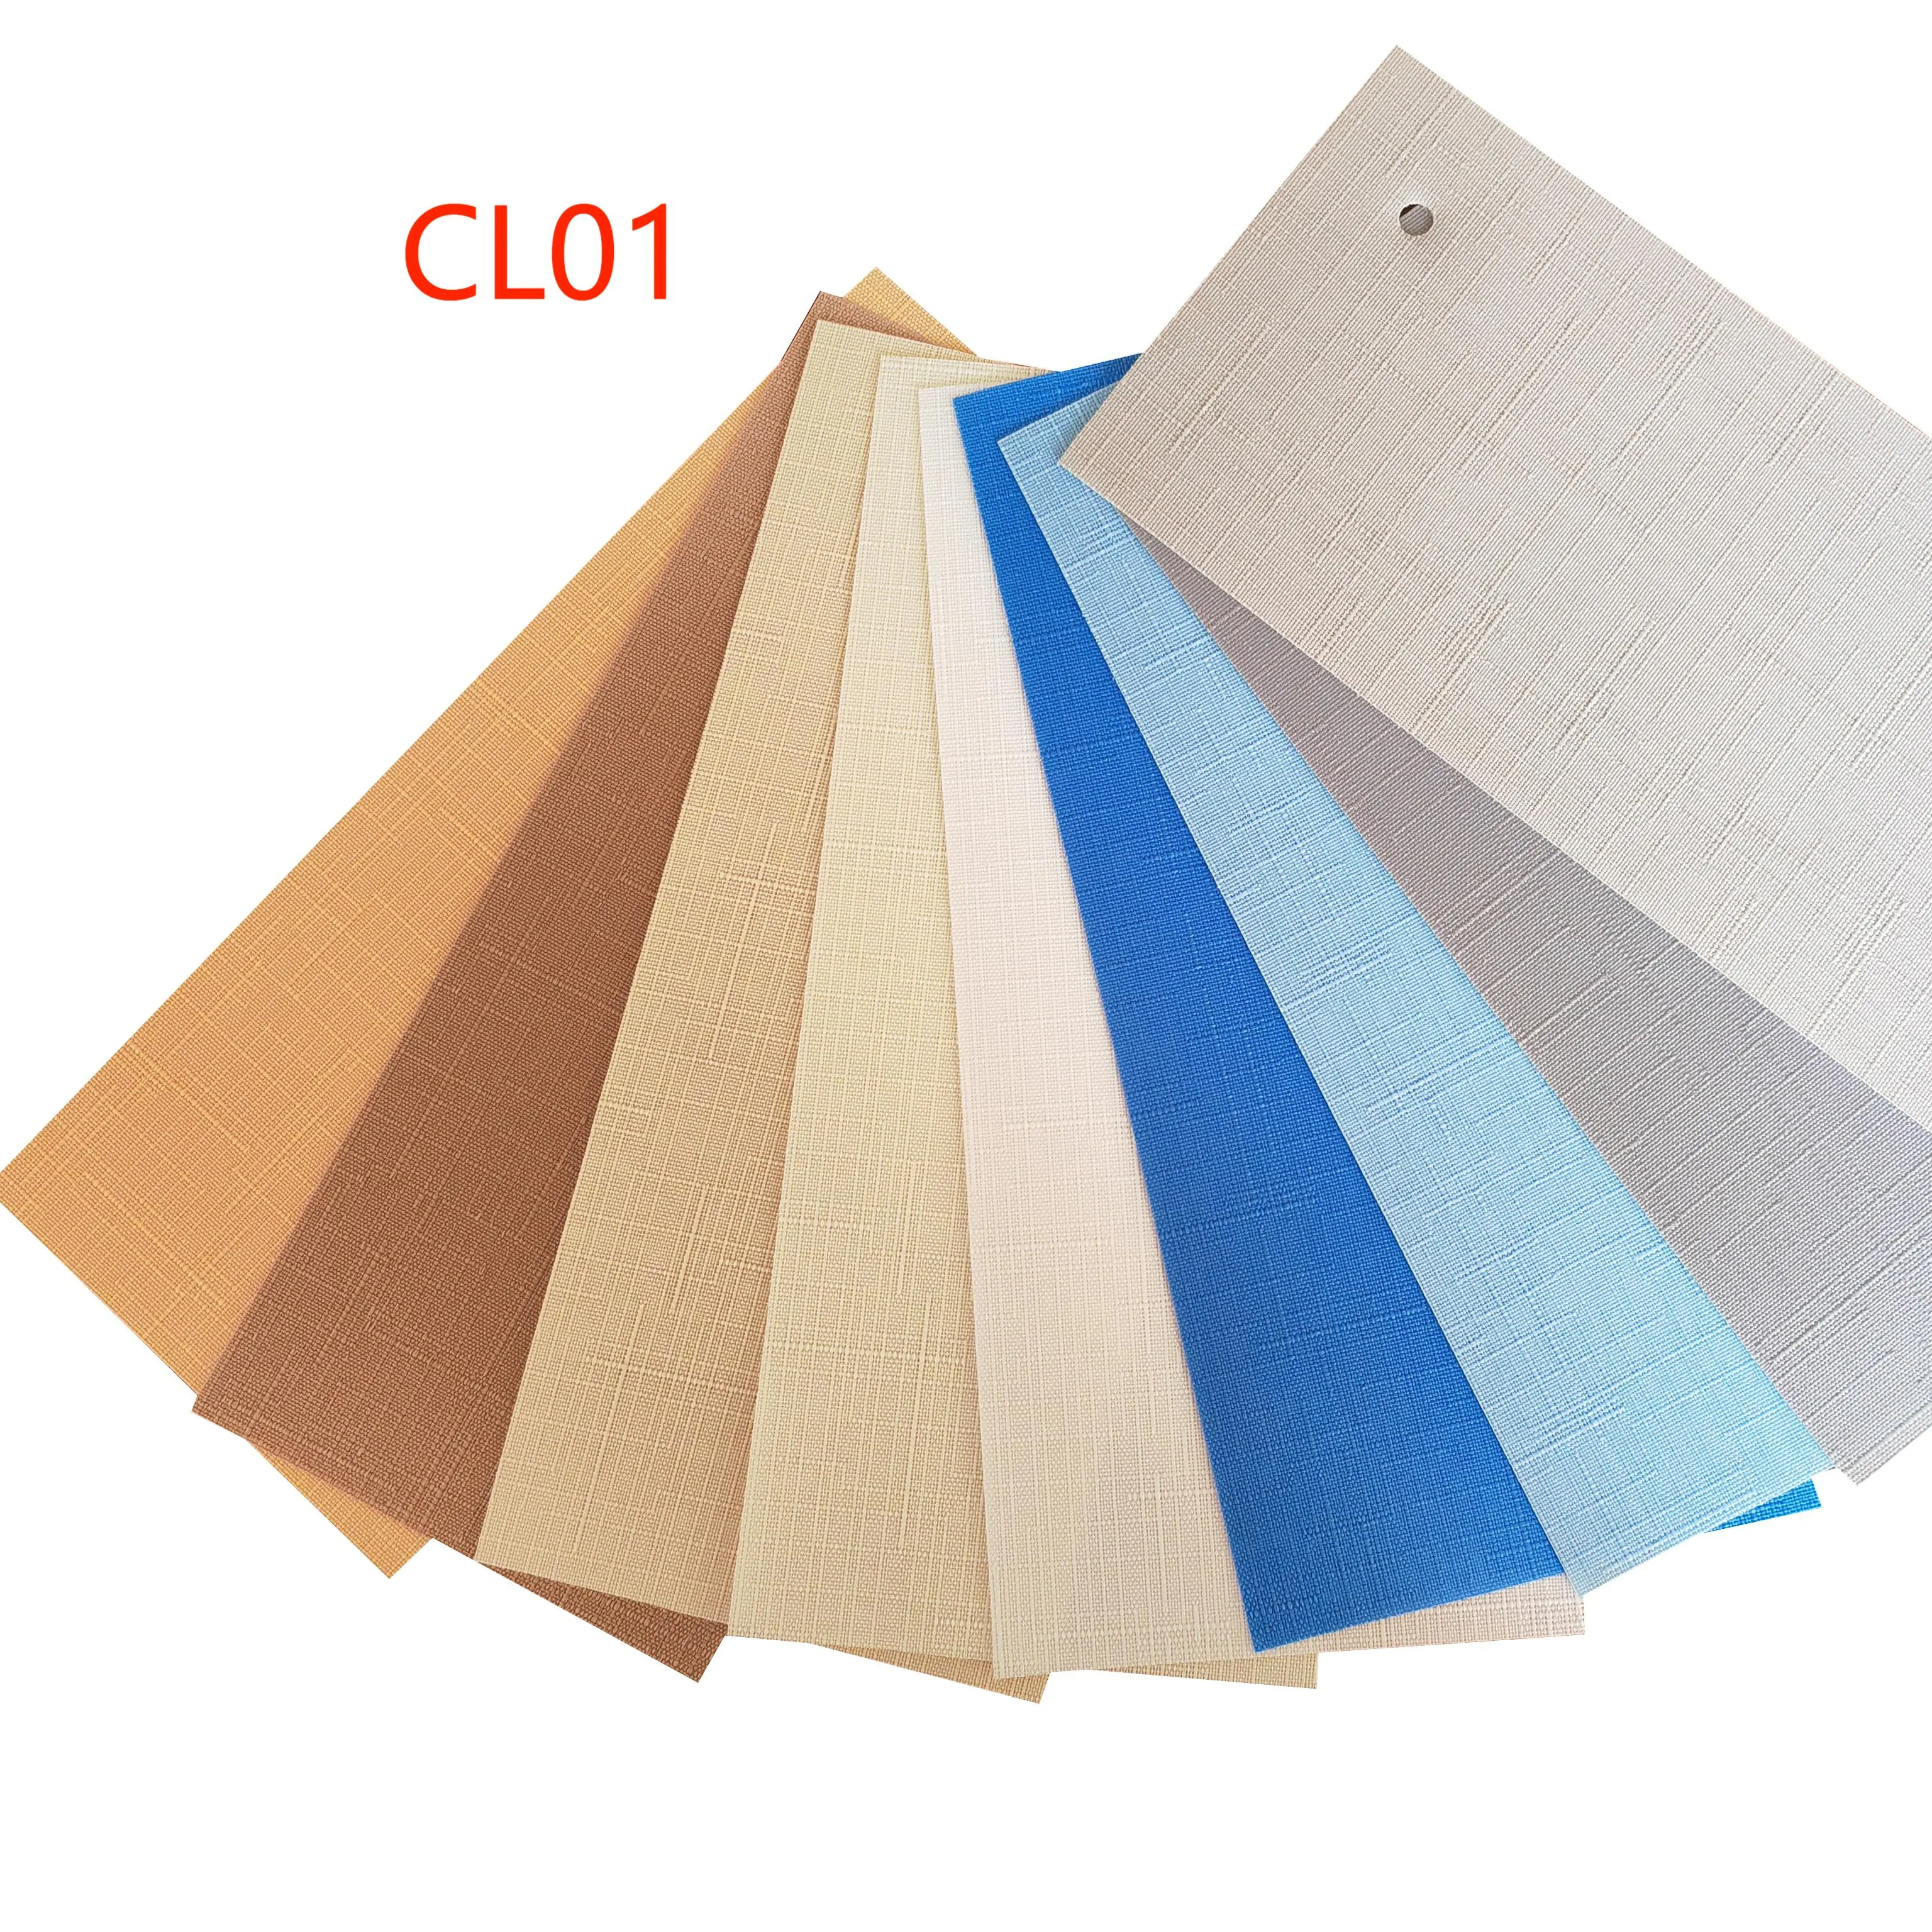 CL01 سلسلة 89-ستائر عمودية من القماش مع العديد من الألوان بكرة تعتيم شفافة للنوافذ العمودية